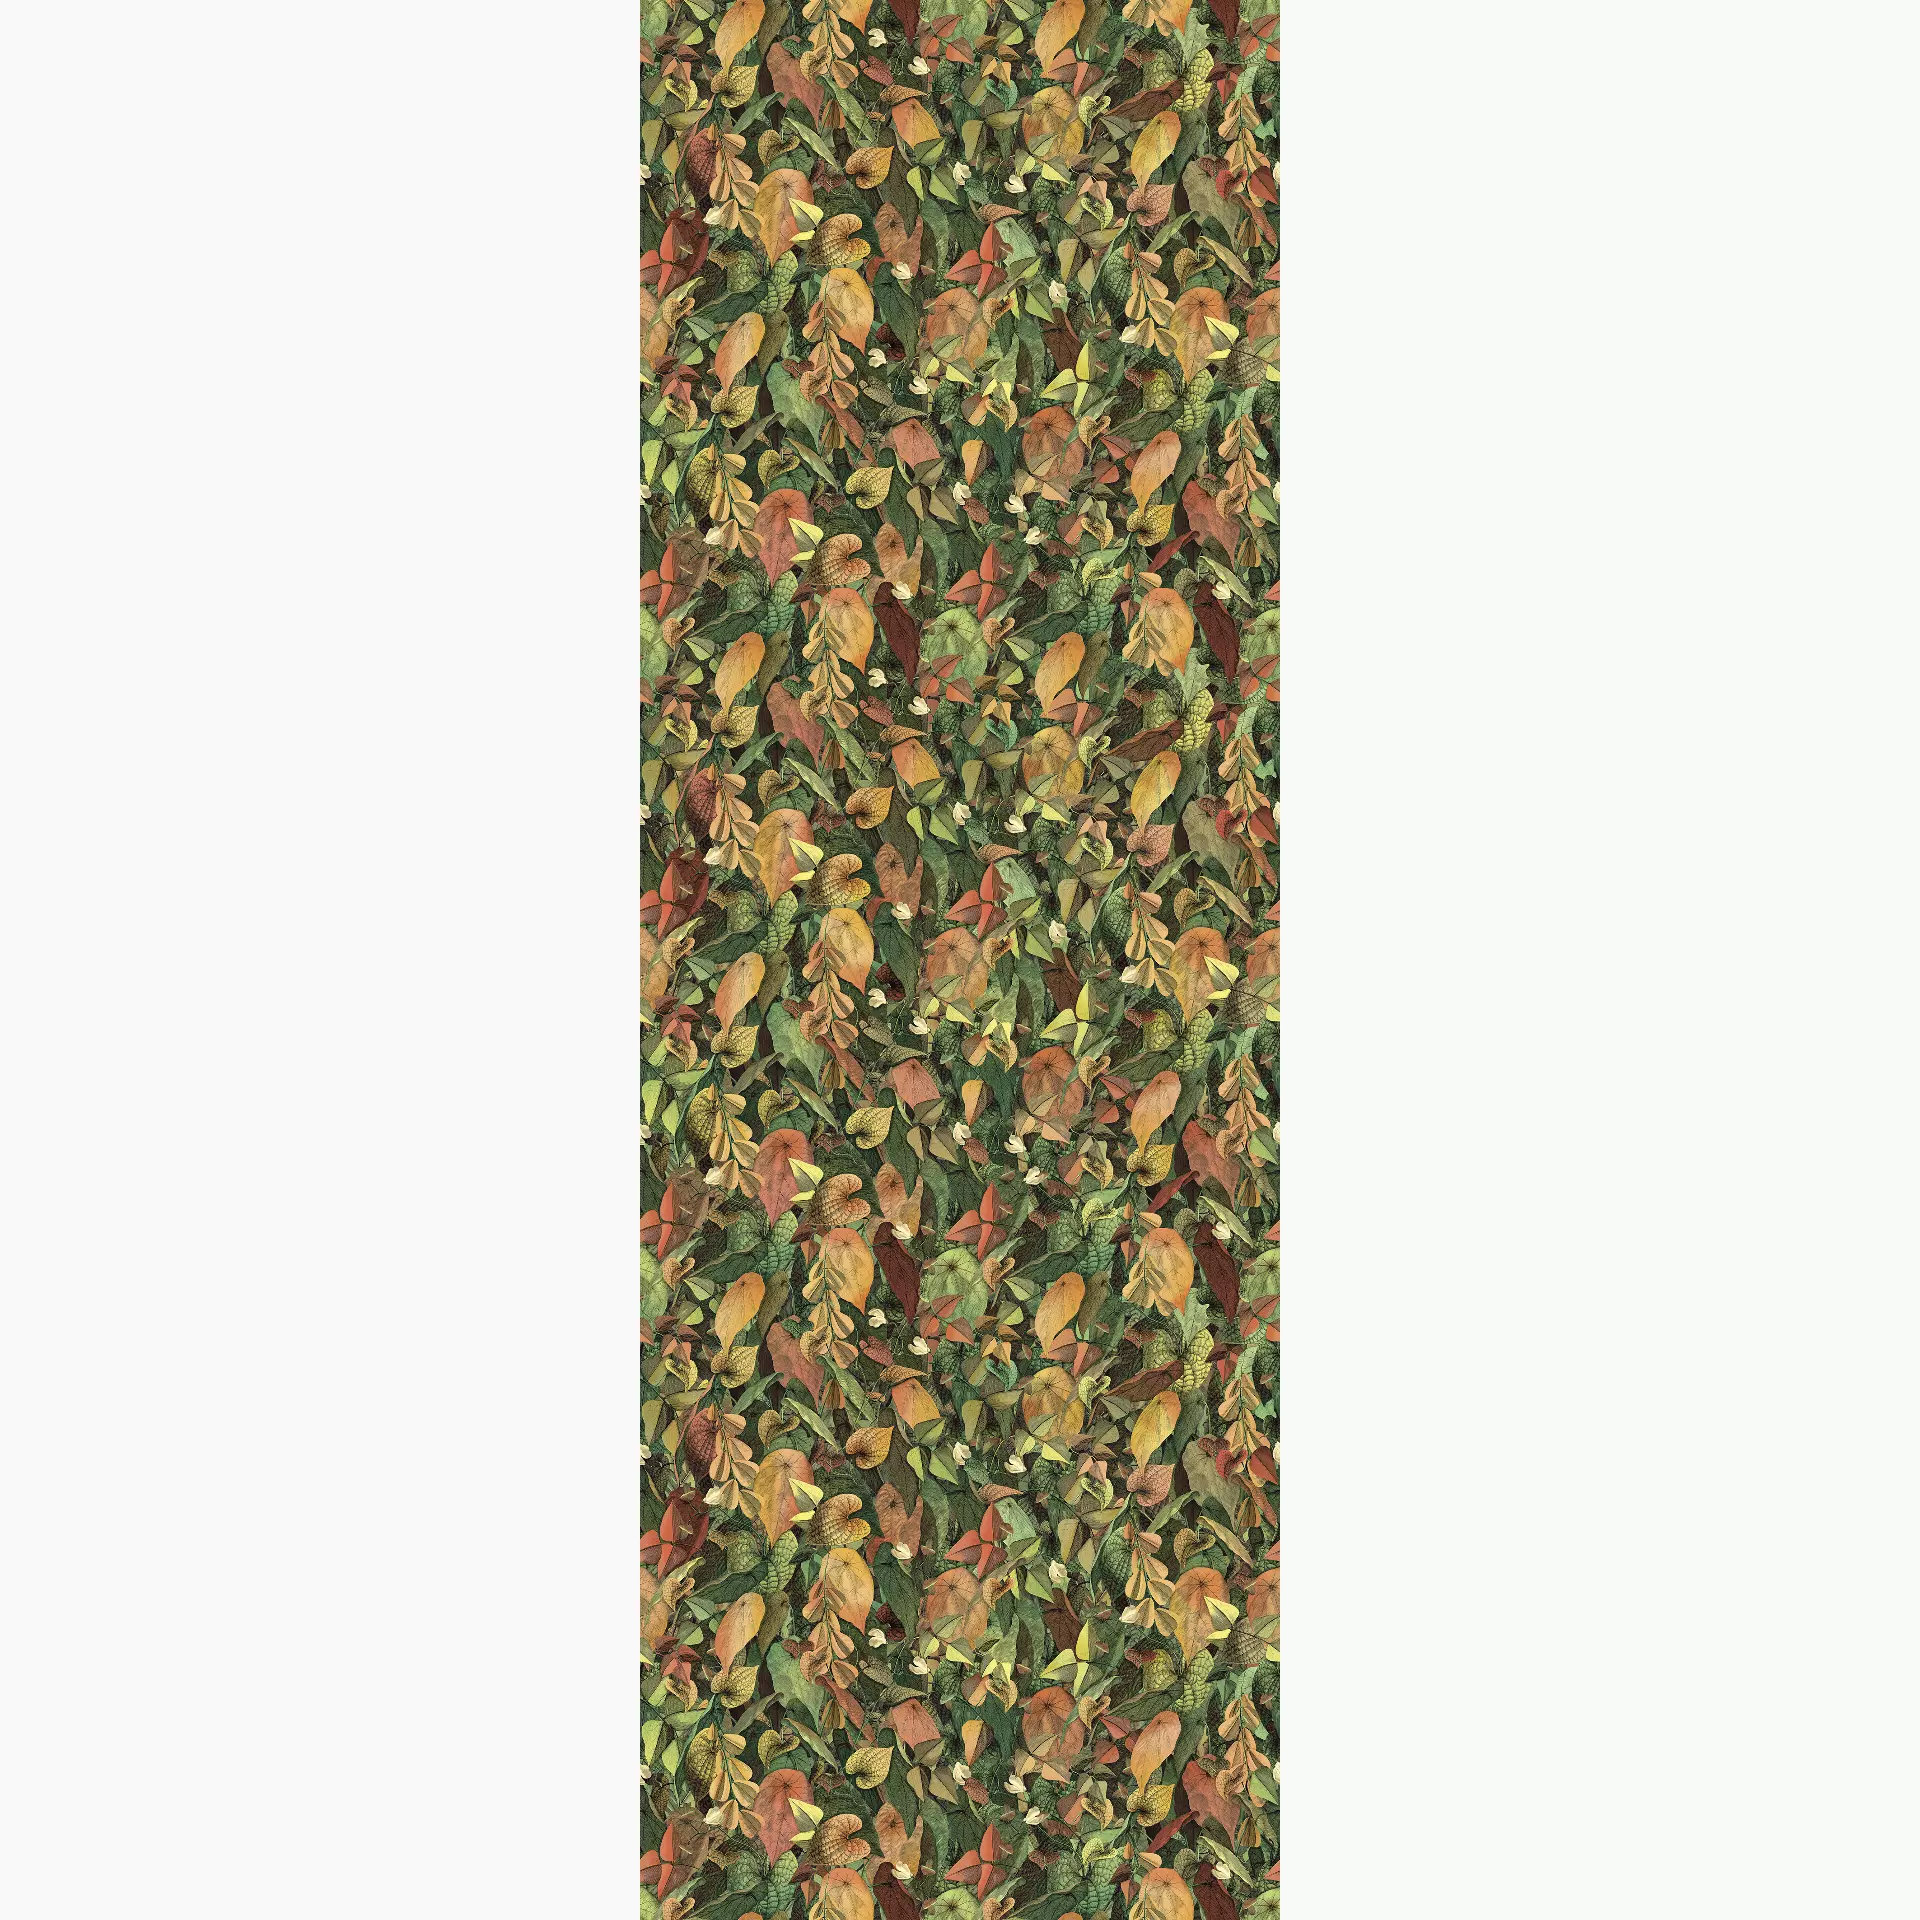 Cottodeste Kerlite Wonderwall Foliage Naturale Protect Decor EG7WP40 100x300cm rectified 3,5mm